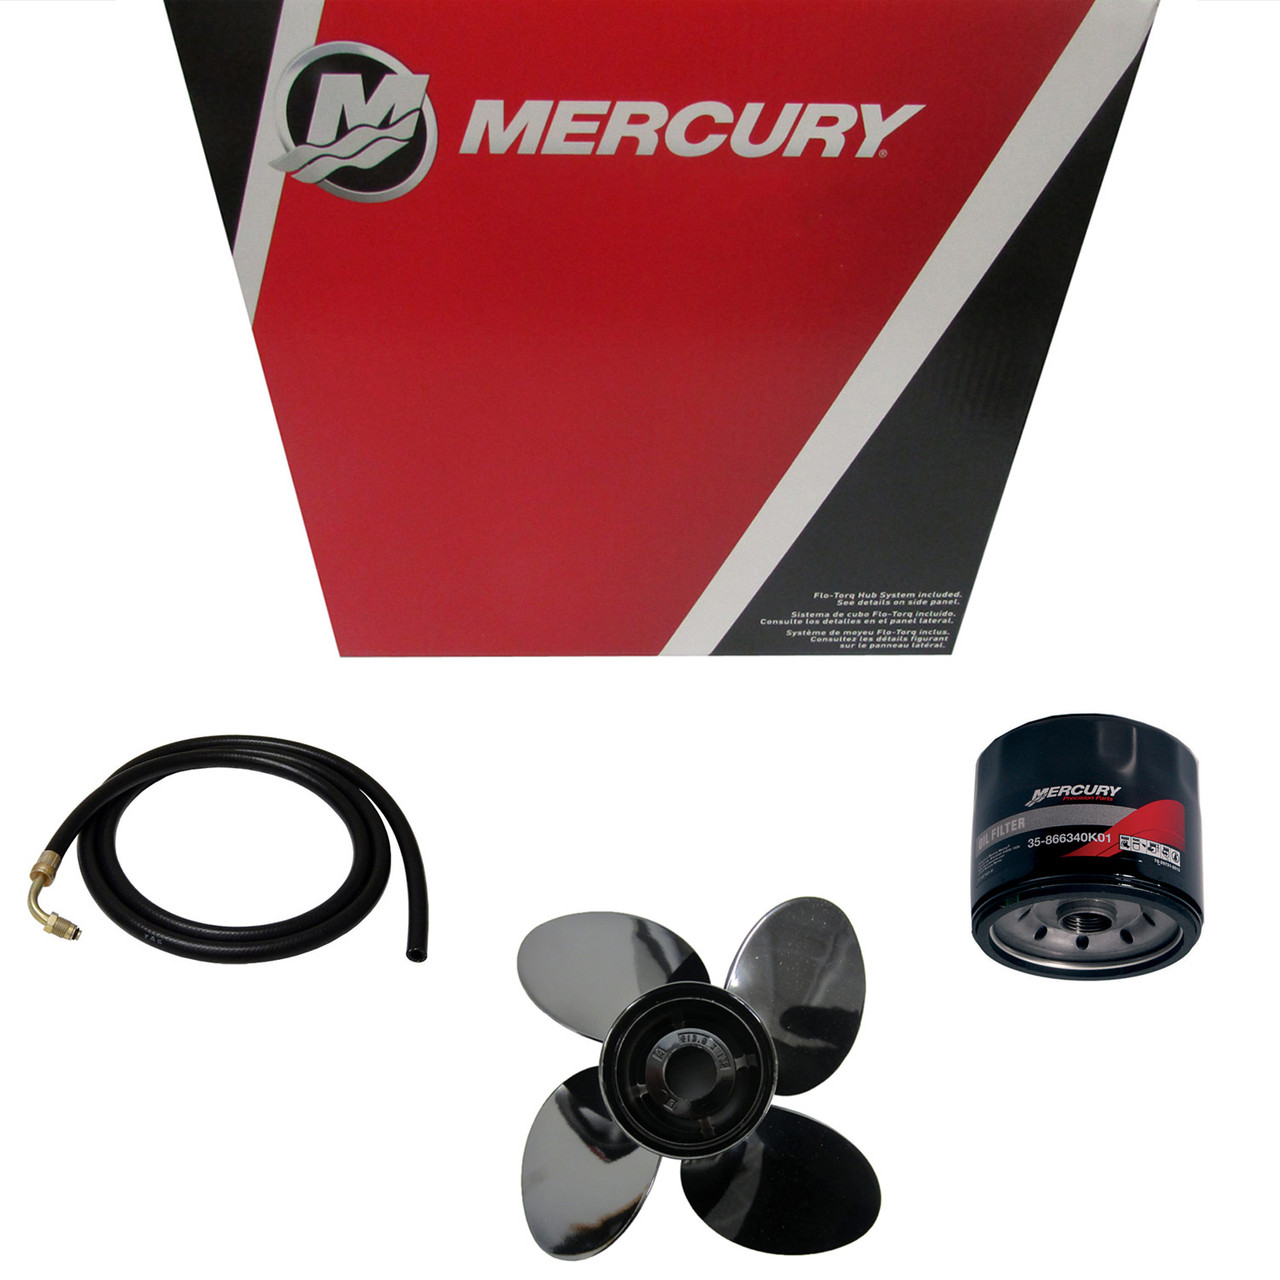 Mercury Marine / Mercruiser New OEM Cable-Rak Str 19, 64-889940A19